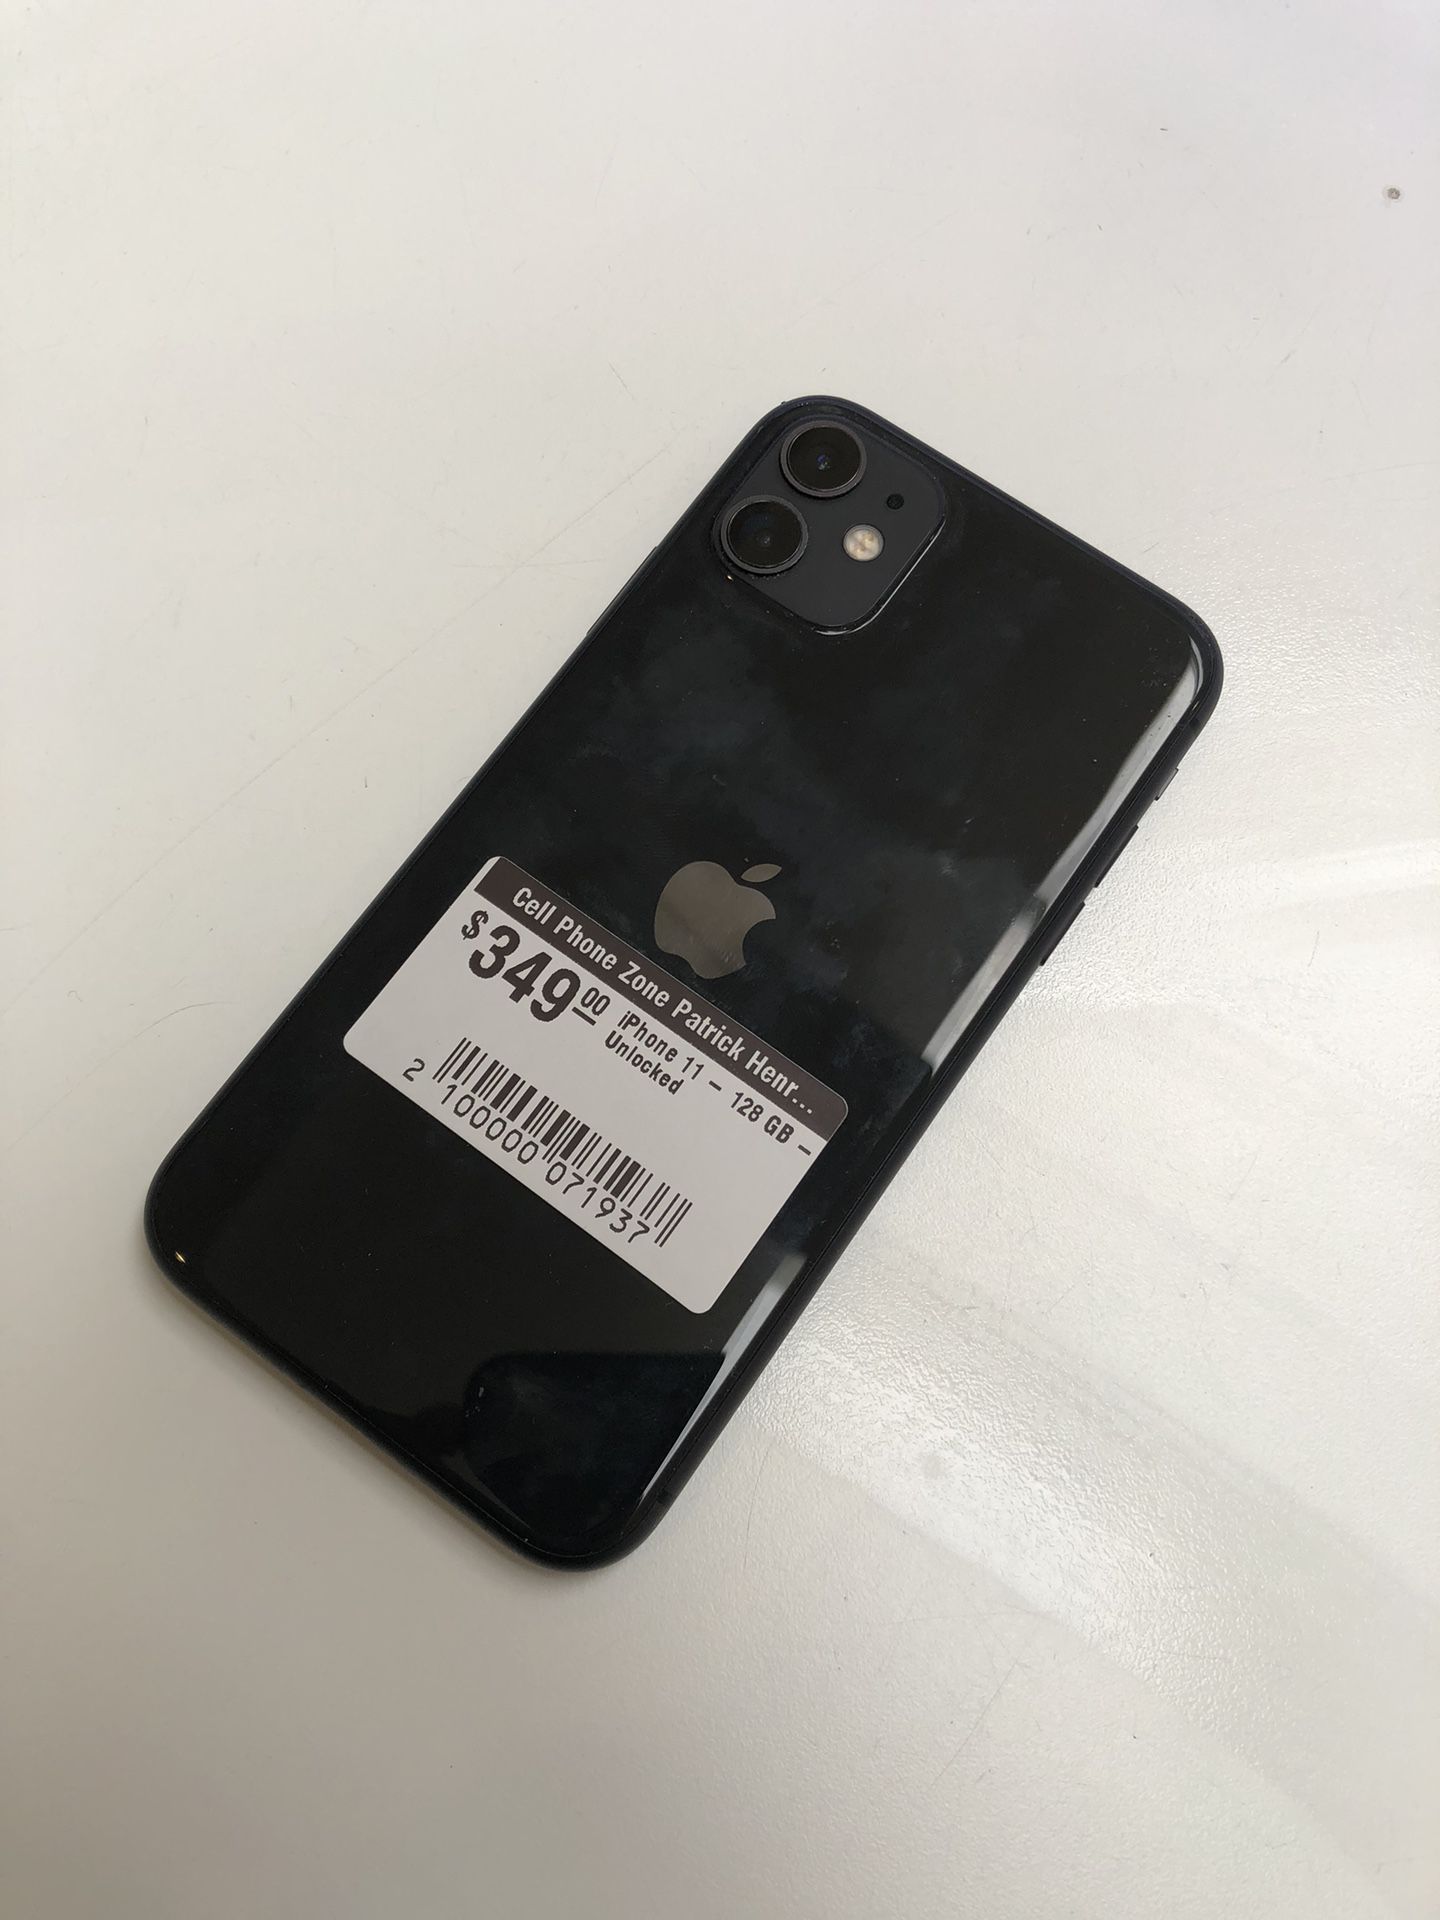 iPhone 11 - 64GB Boost Mobile Black